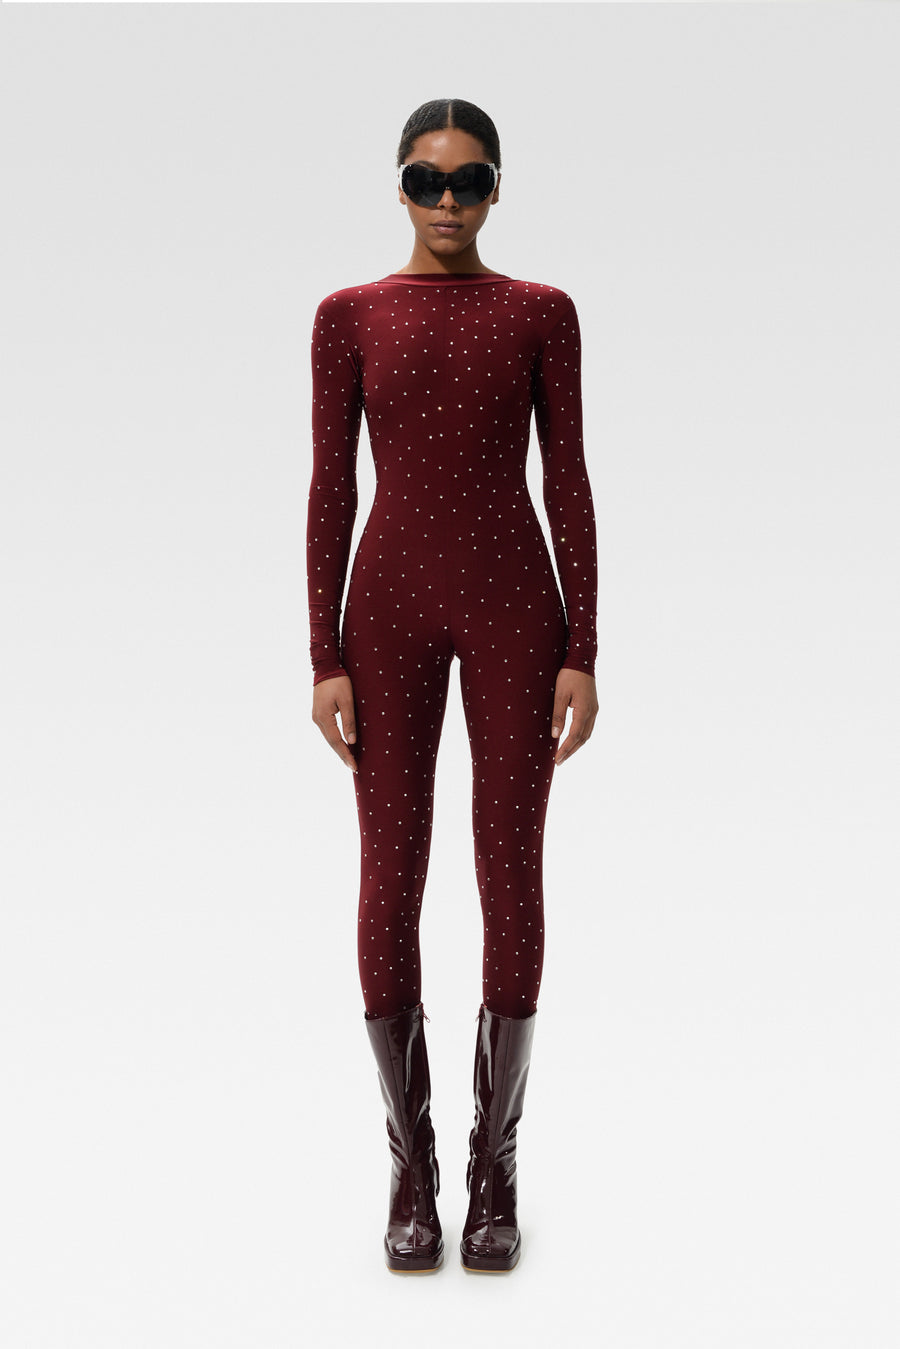 Burgundy Bodysuit with Sparkling Details